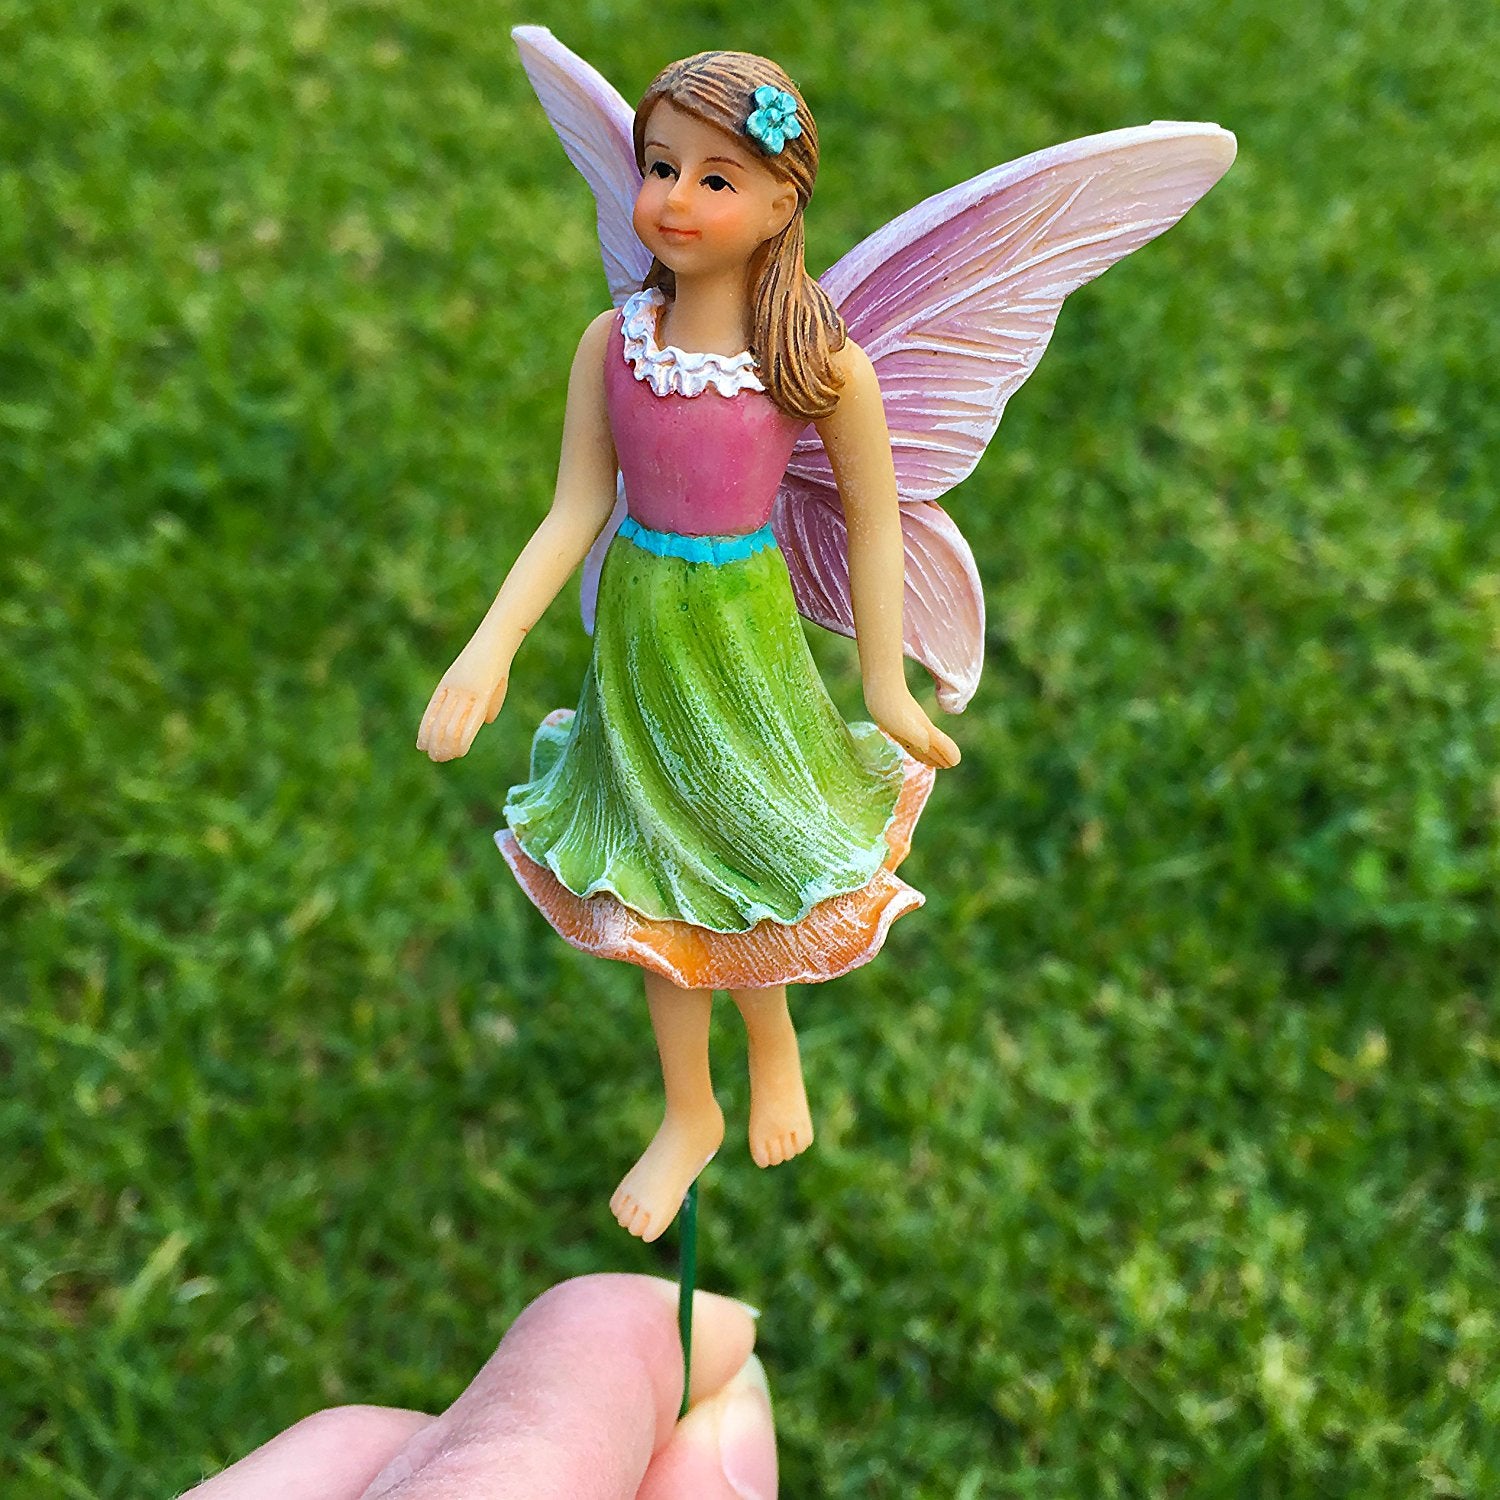 Miniature Dollhouse Garden Fairy Decor Figurines Mini DIY 4PCS Sleeping  Fairies